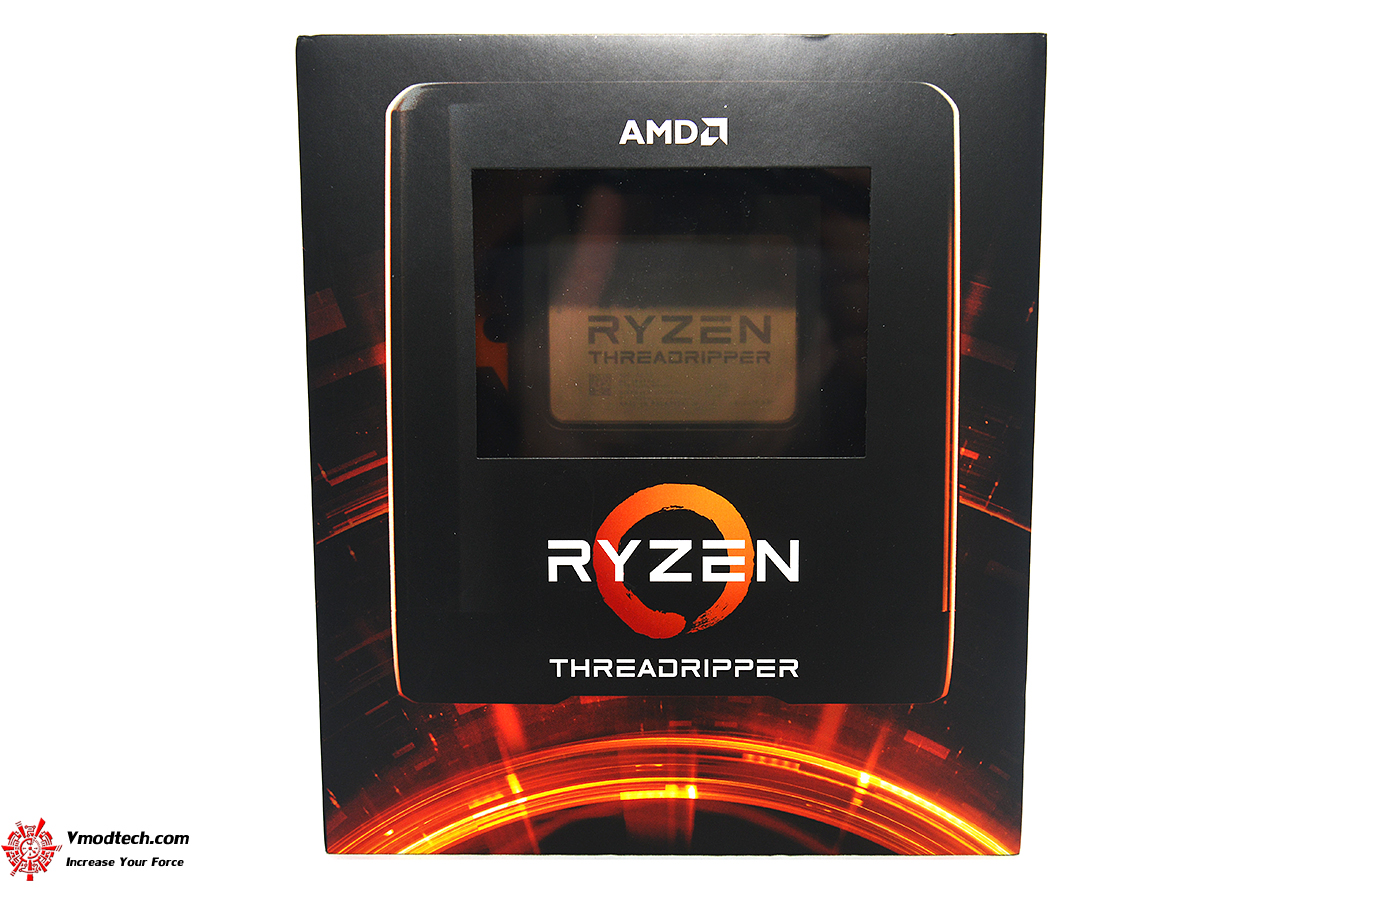 dsc 1250 AMD RYZEN THREADRIPPER 3990X PROCESSOR REVIEW